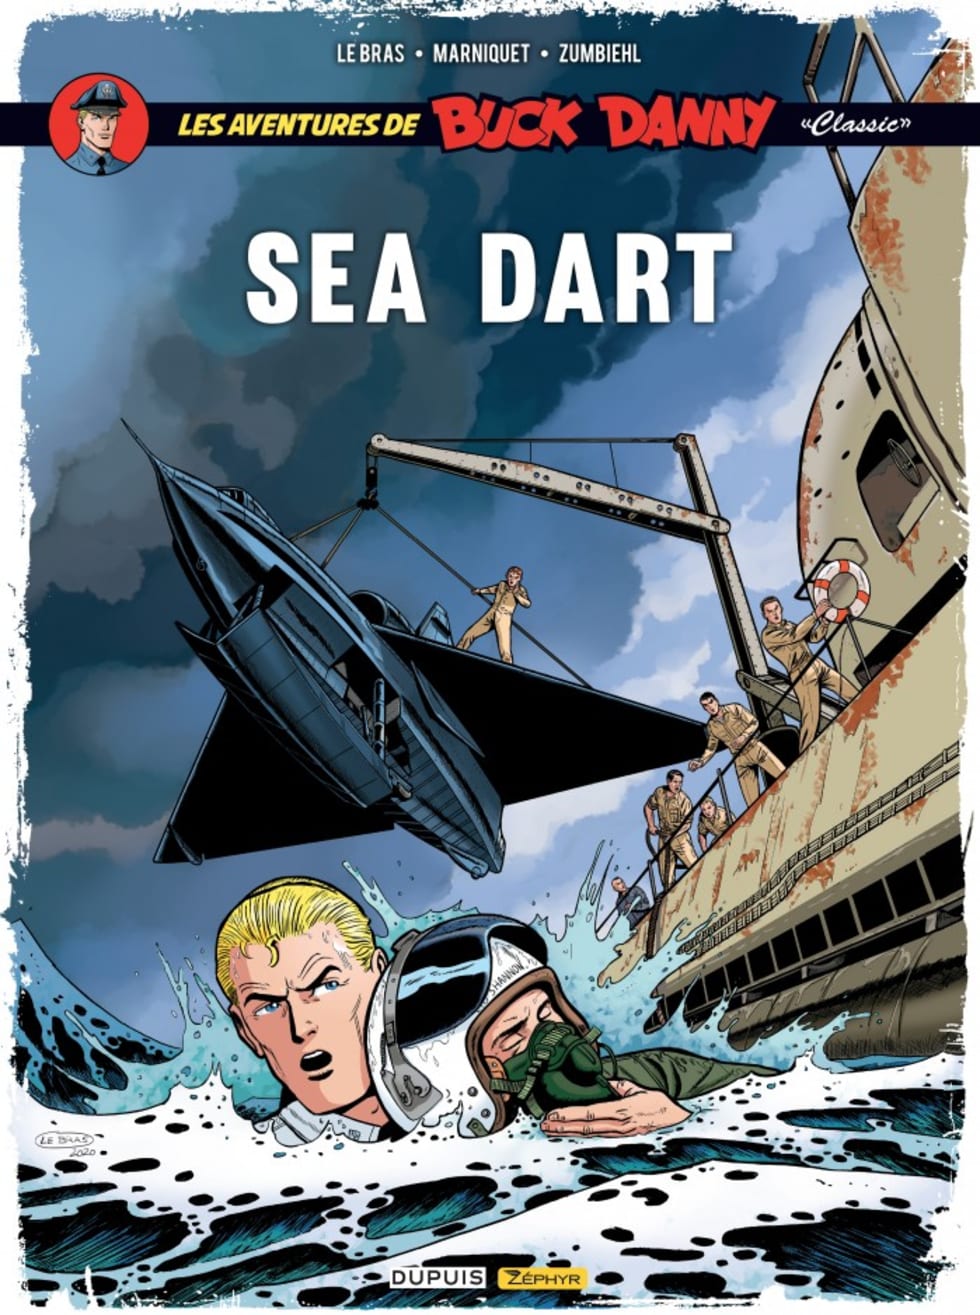 Comic Book: “Buck Danny - Volume 7: Buck Danny Classic - Sea Dart”